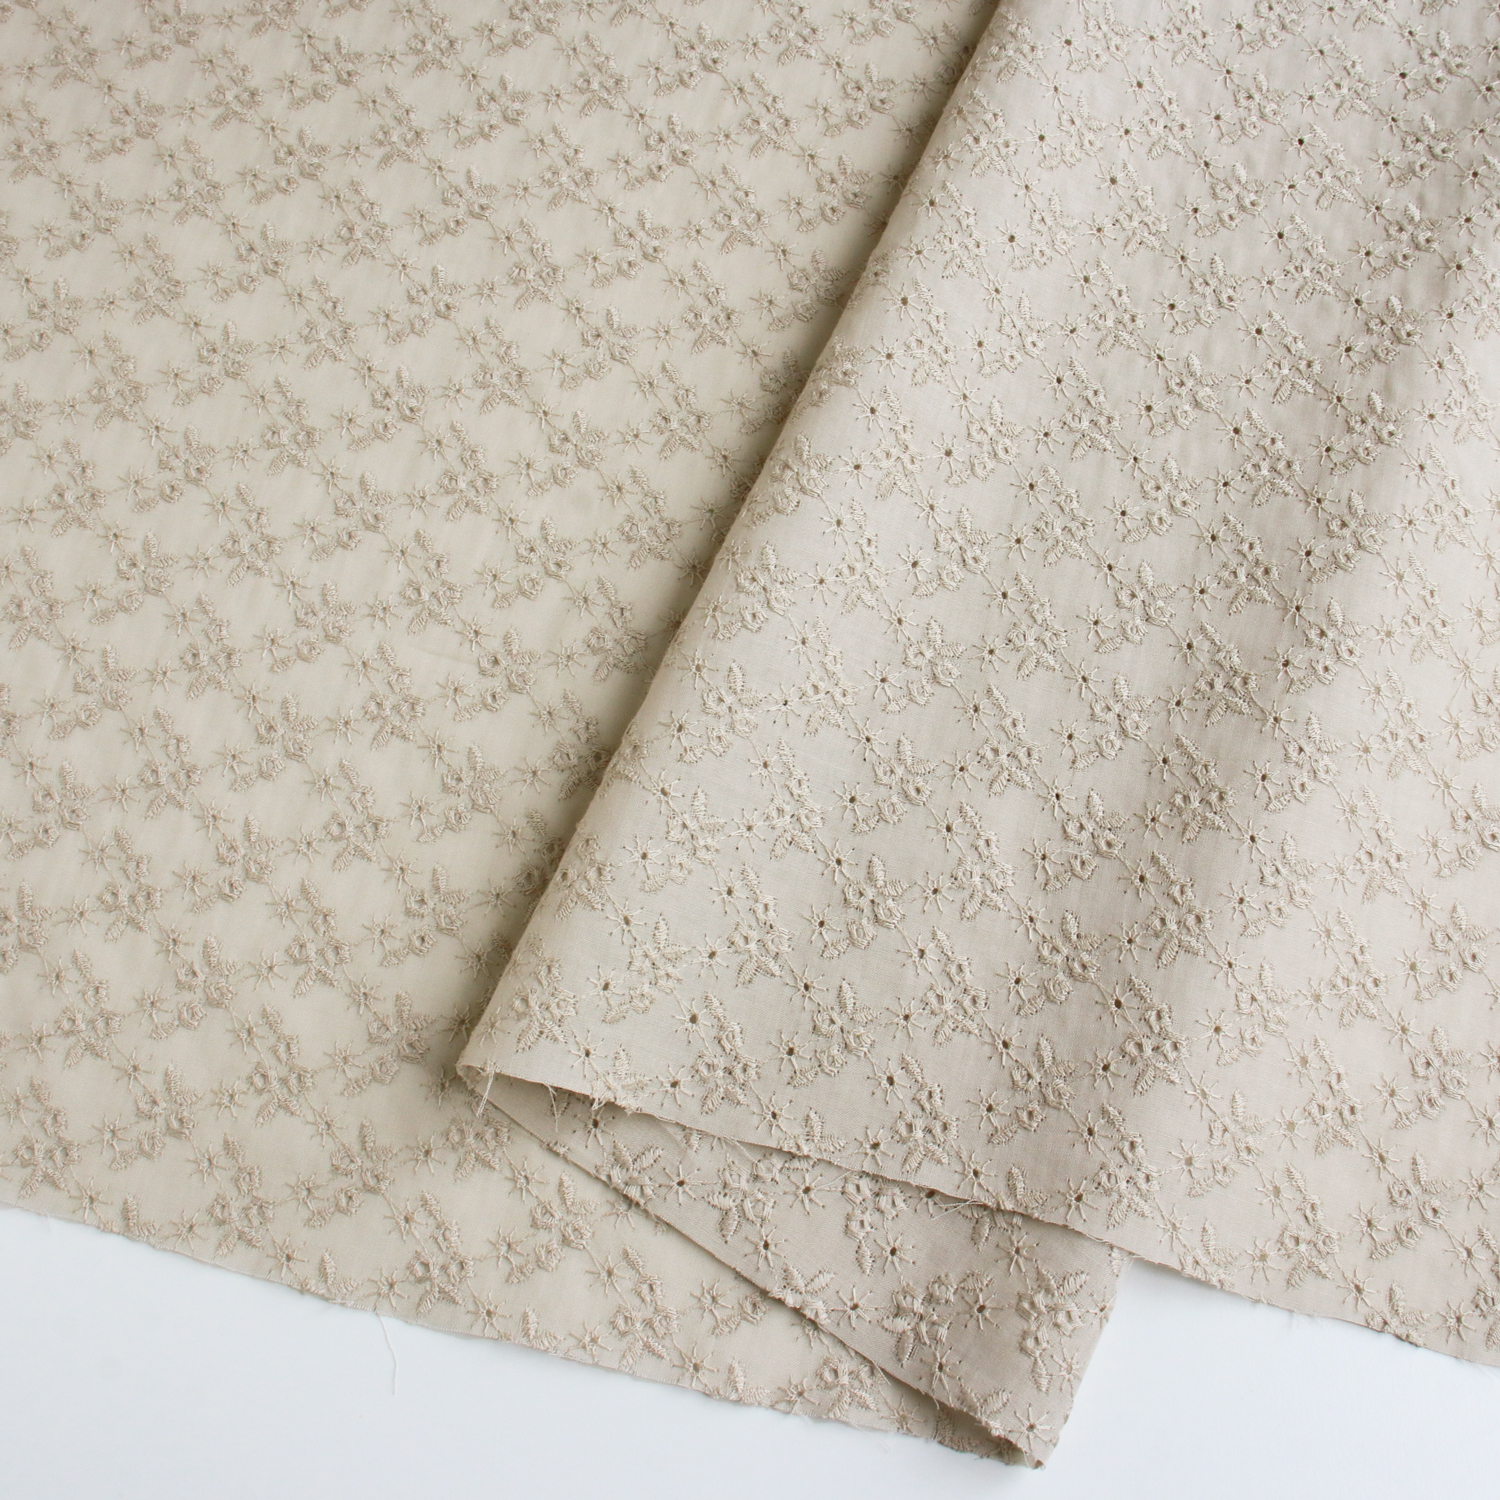 AL694R-81 cotton lace fabric, Width 100cm, 〇m roll (roll)